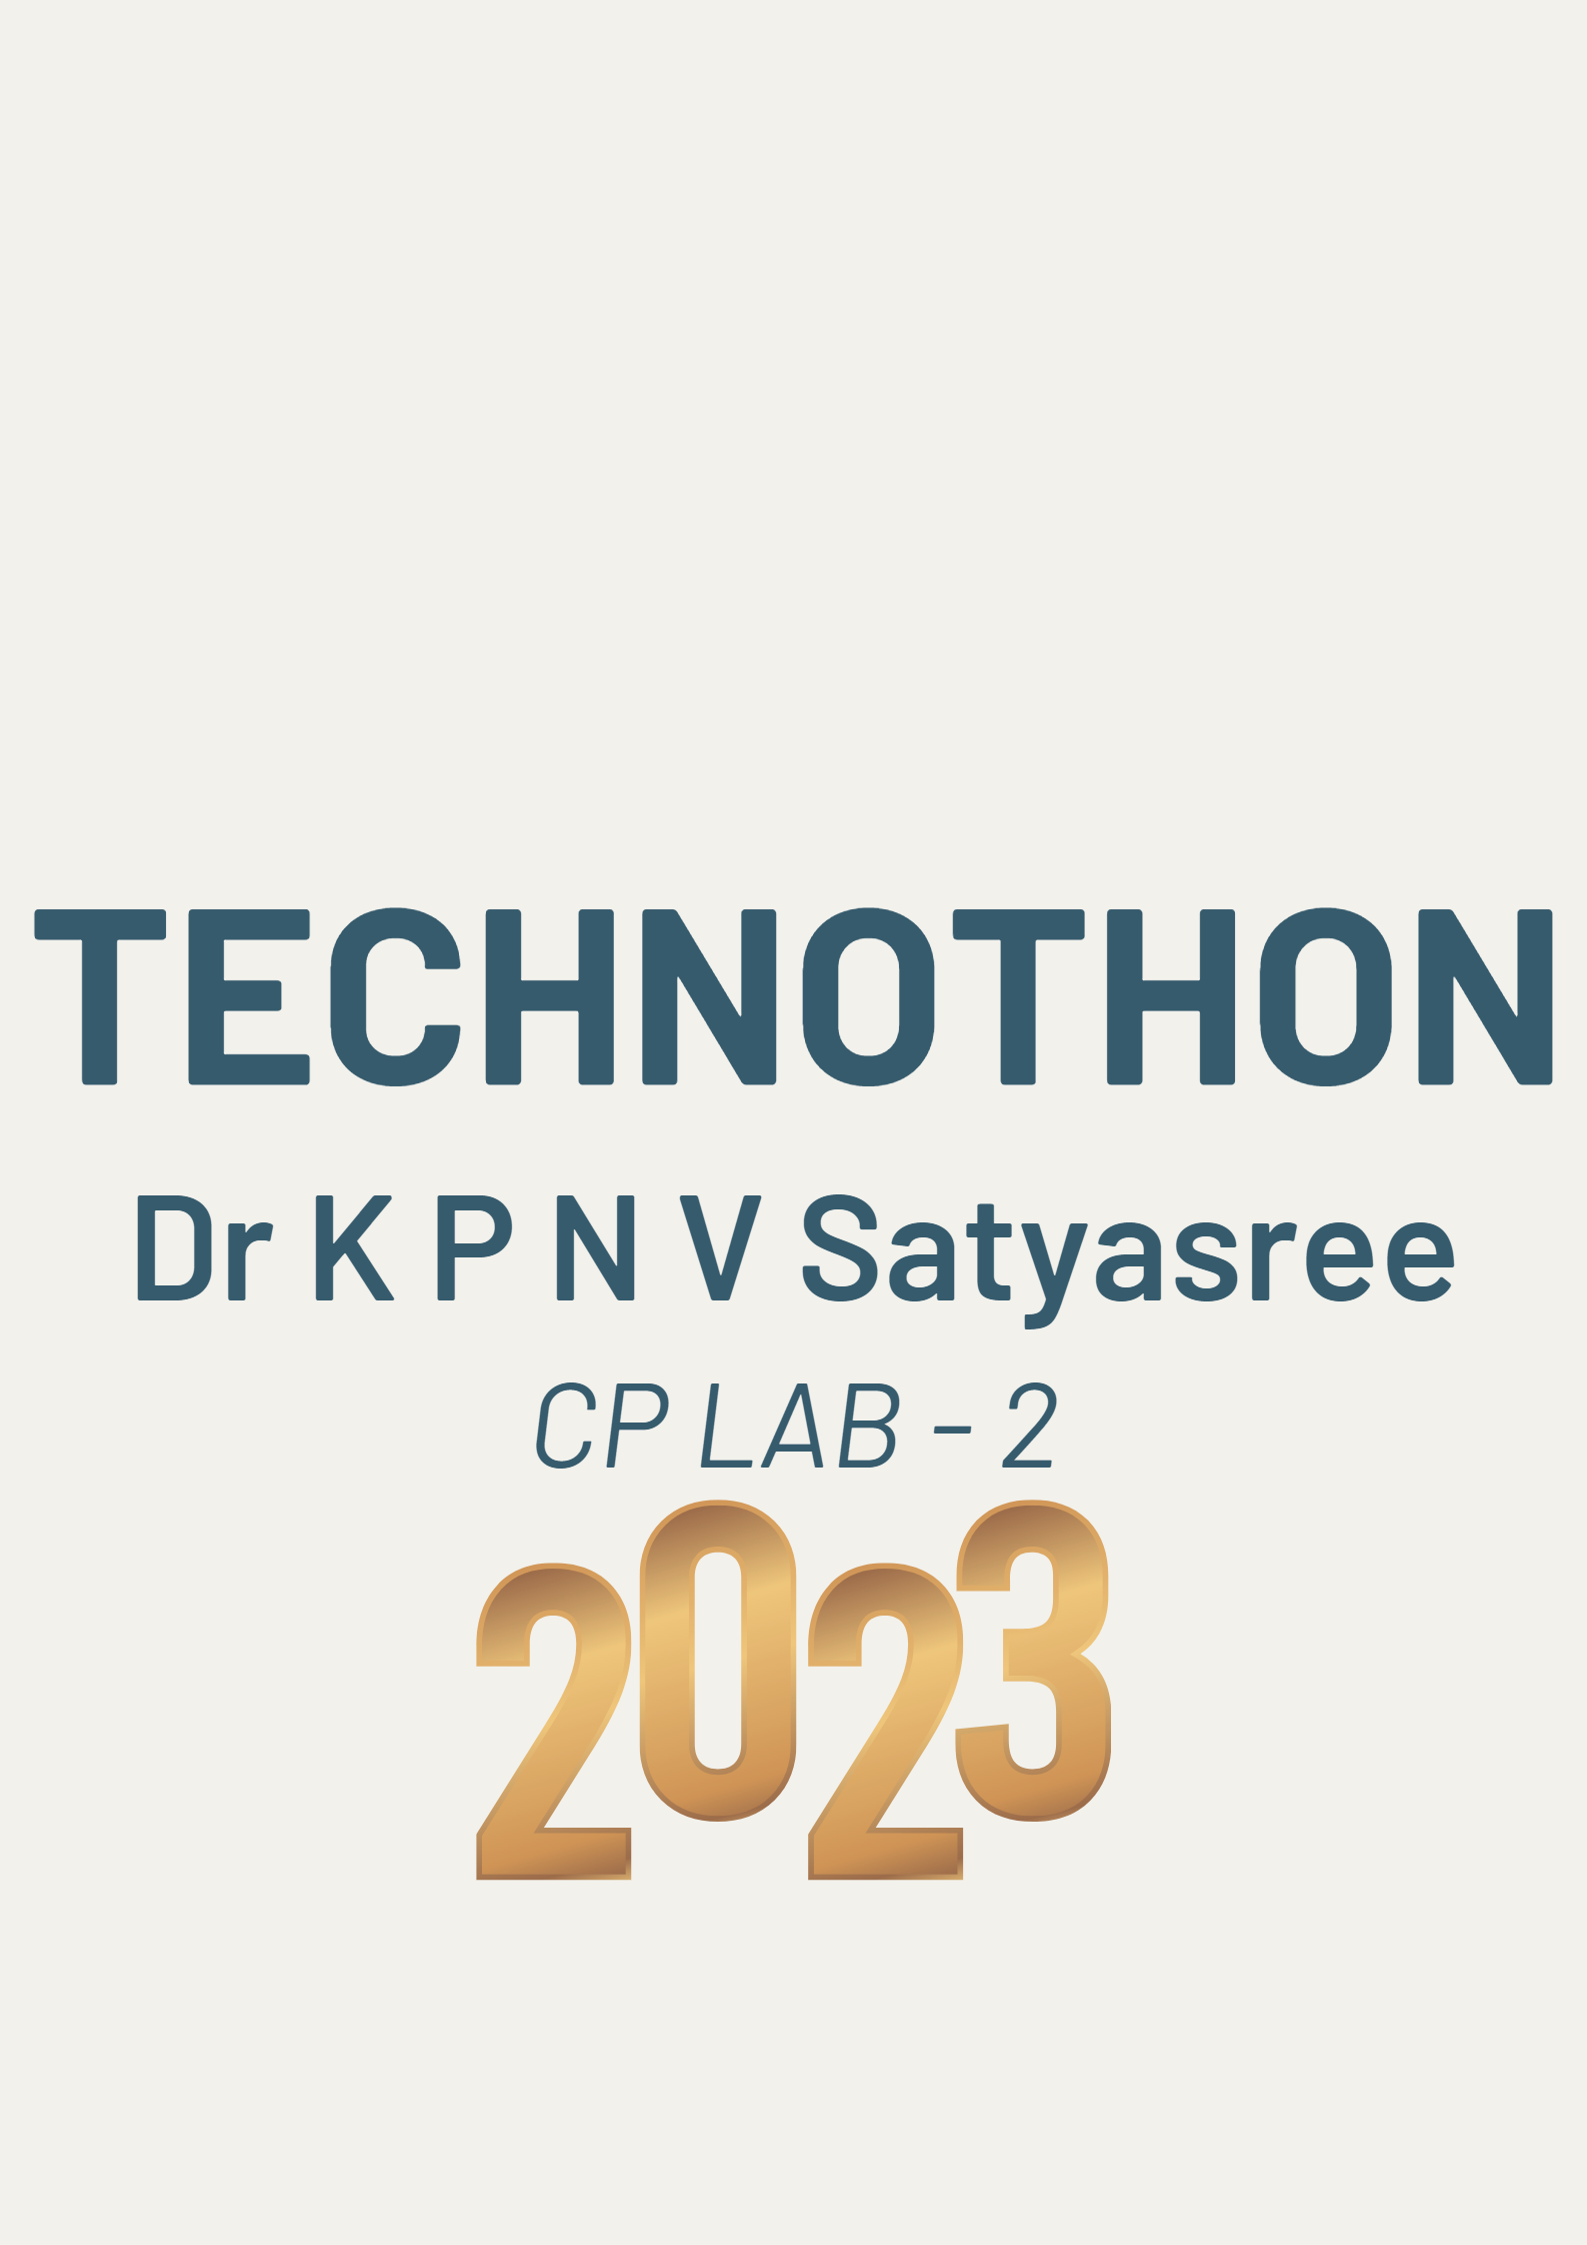 Technothon